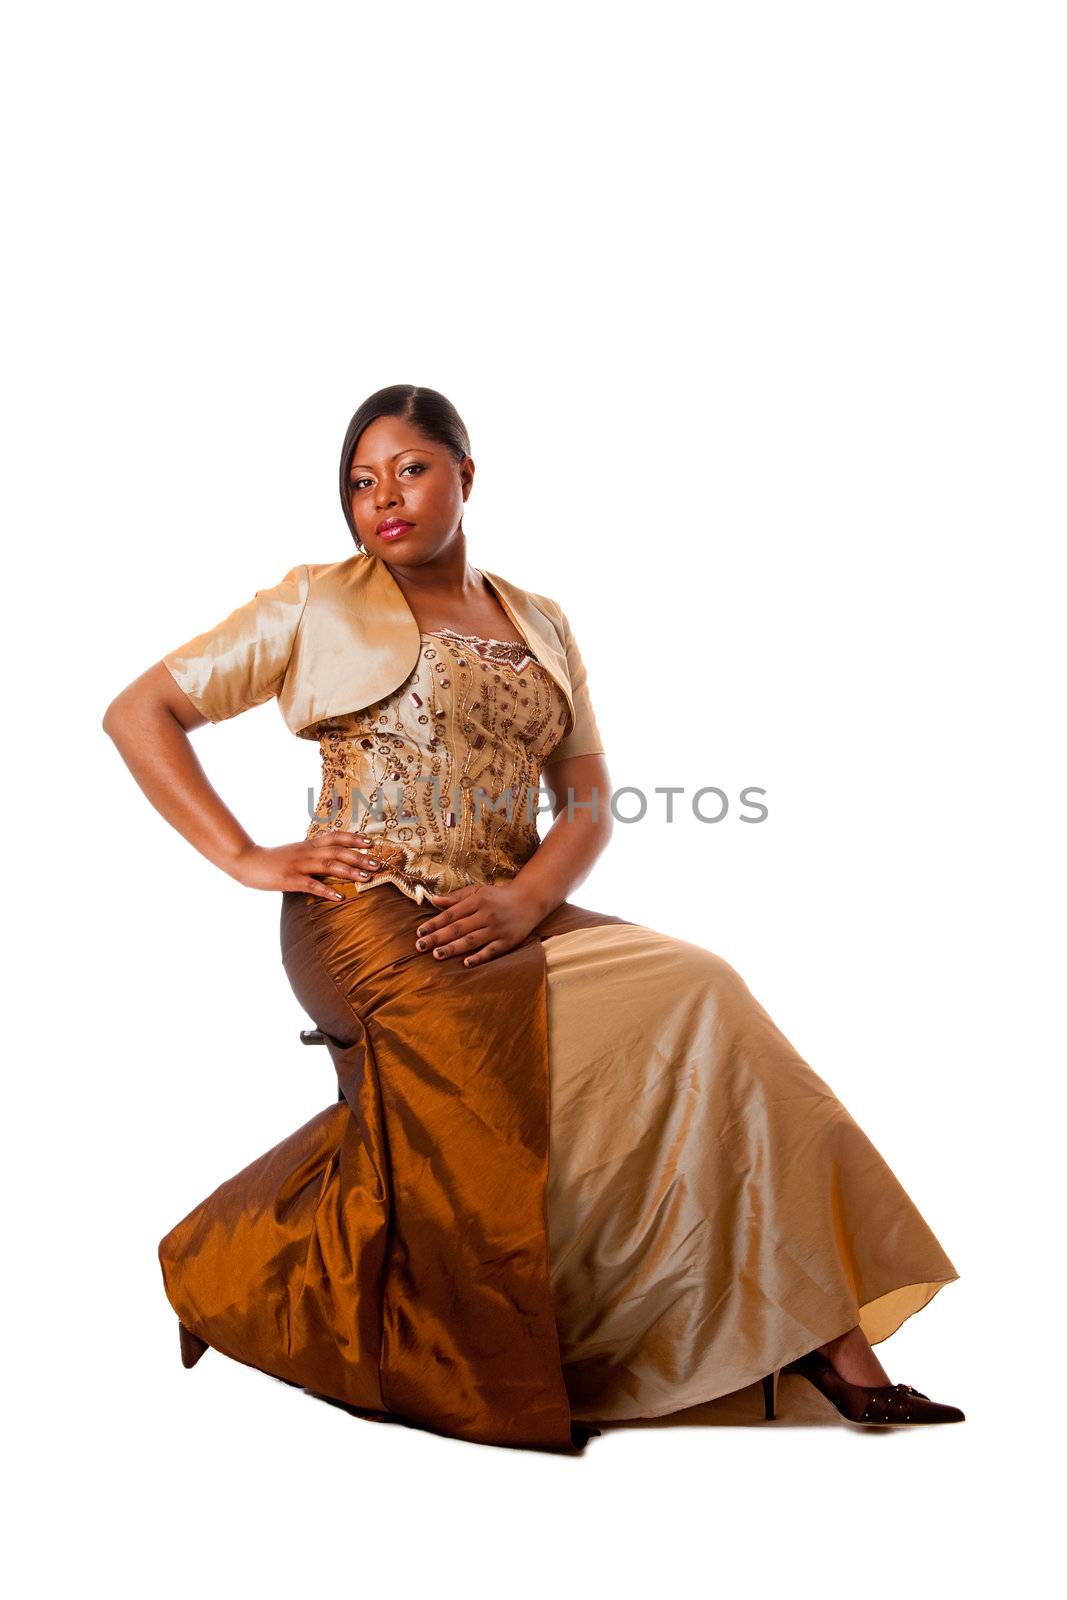 Beautiful African woman by phakimata